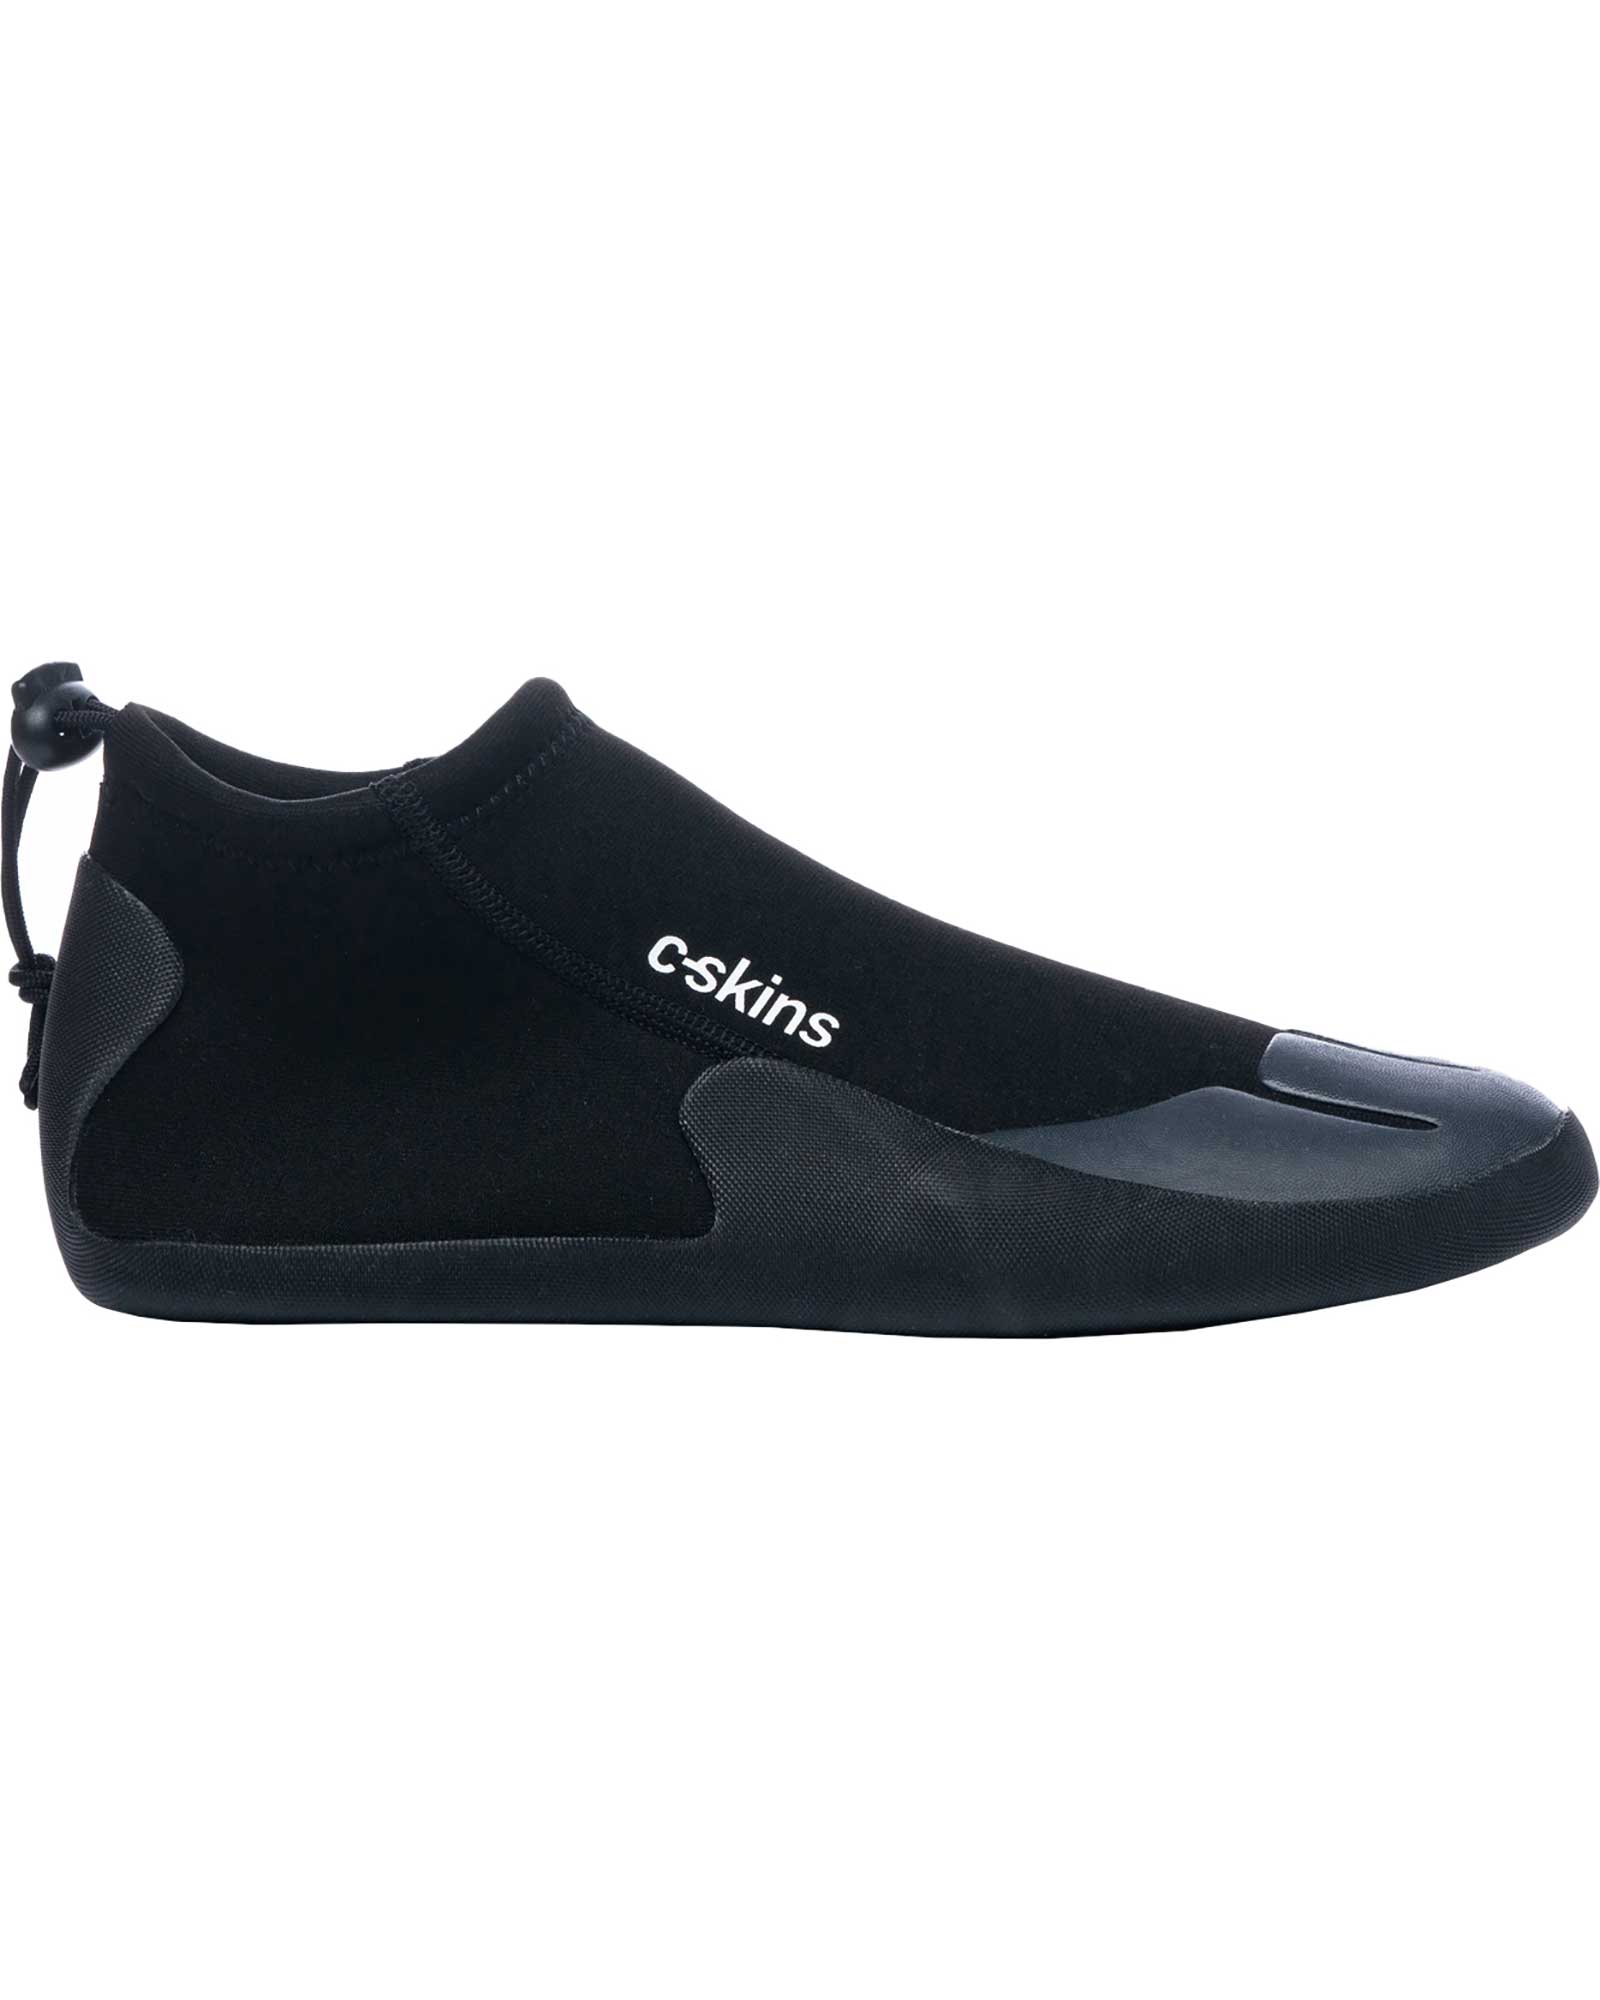 C Skins Legend 3mm Reef Boots - Black/Charcoal UK 9